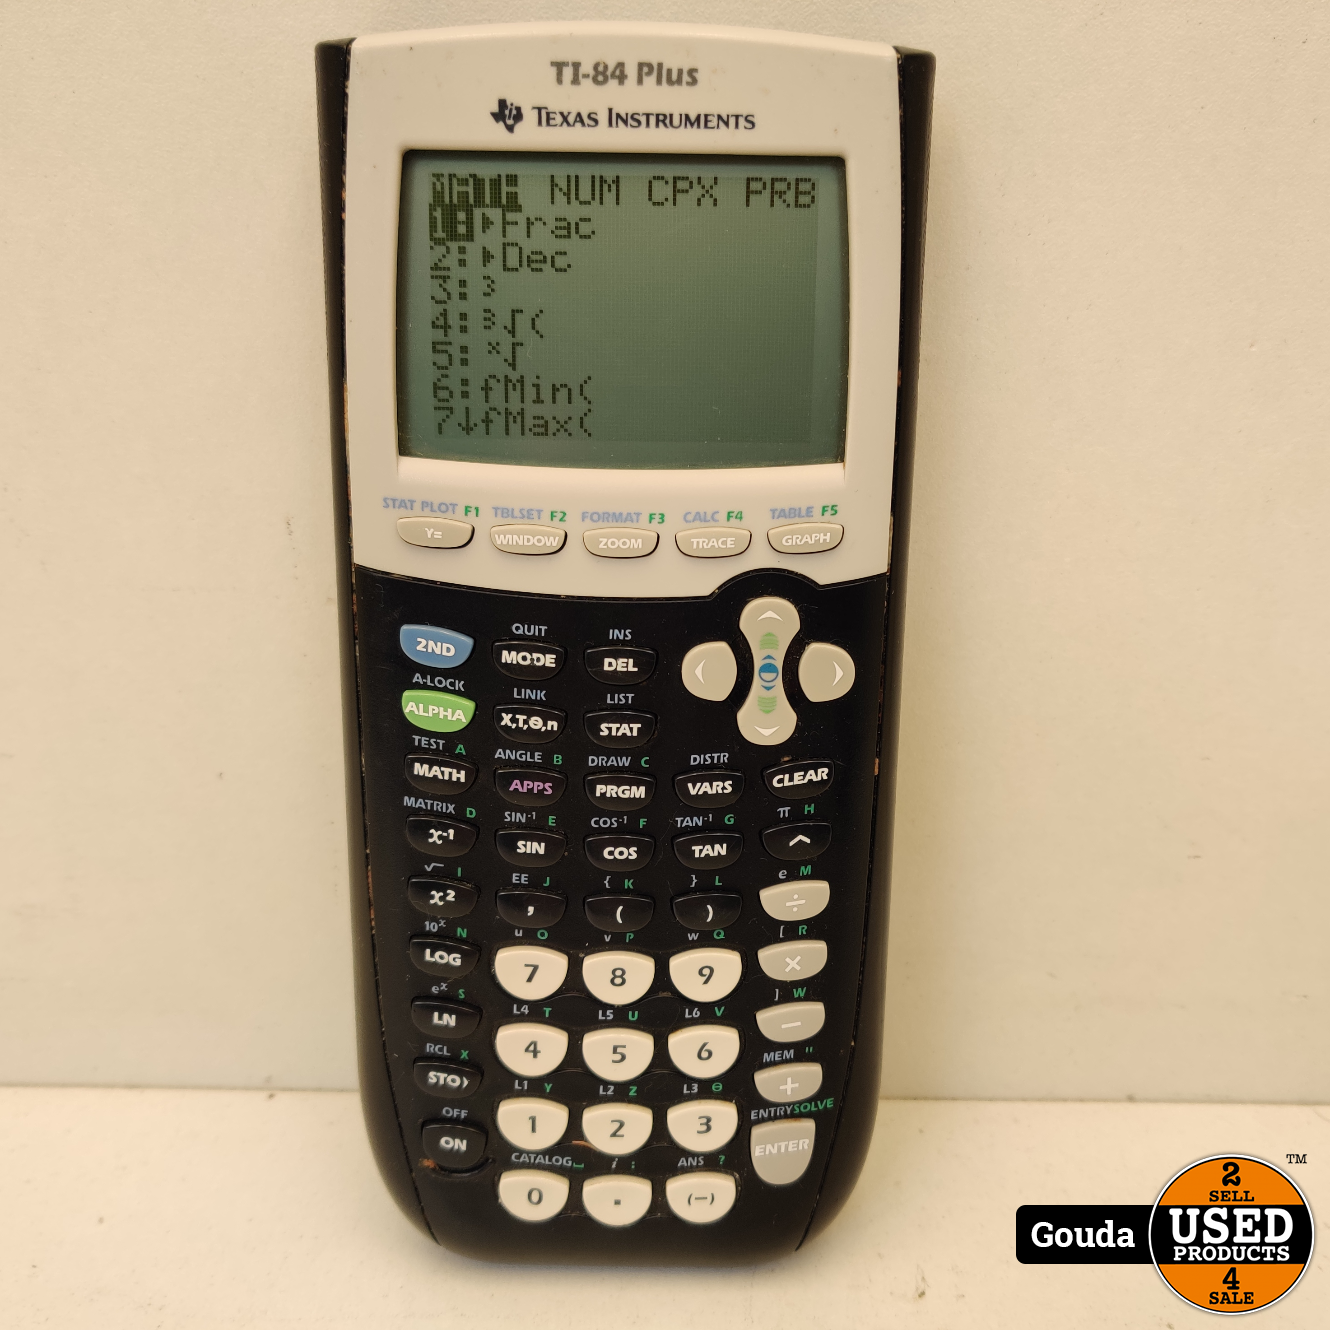 Mededogen Adverteerder Concurreren Texas Instruments TI-84 Plus grafische rekenmachine - Used Products Gouda